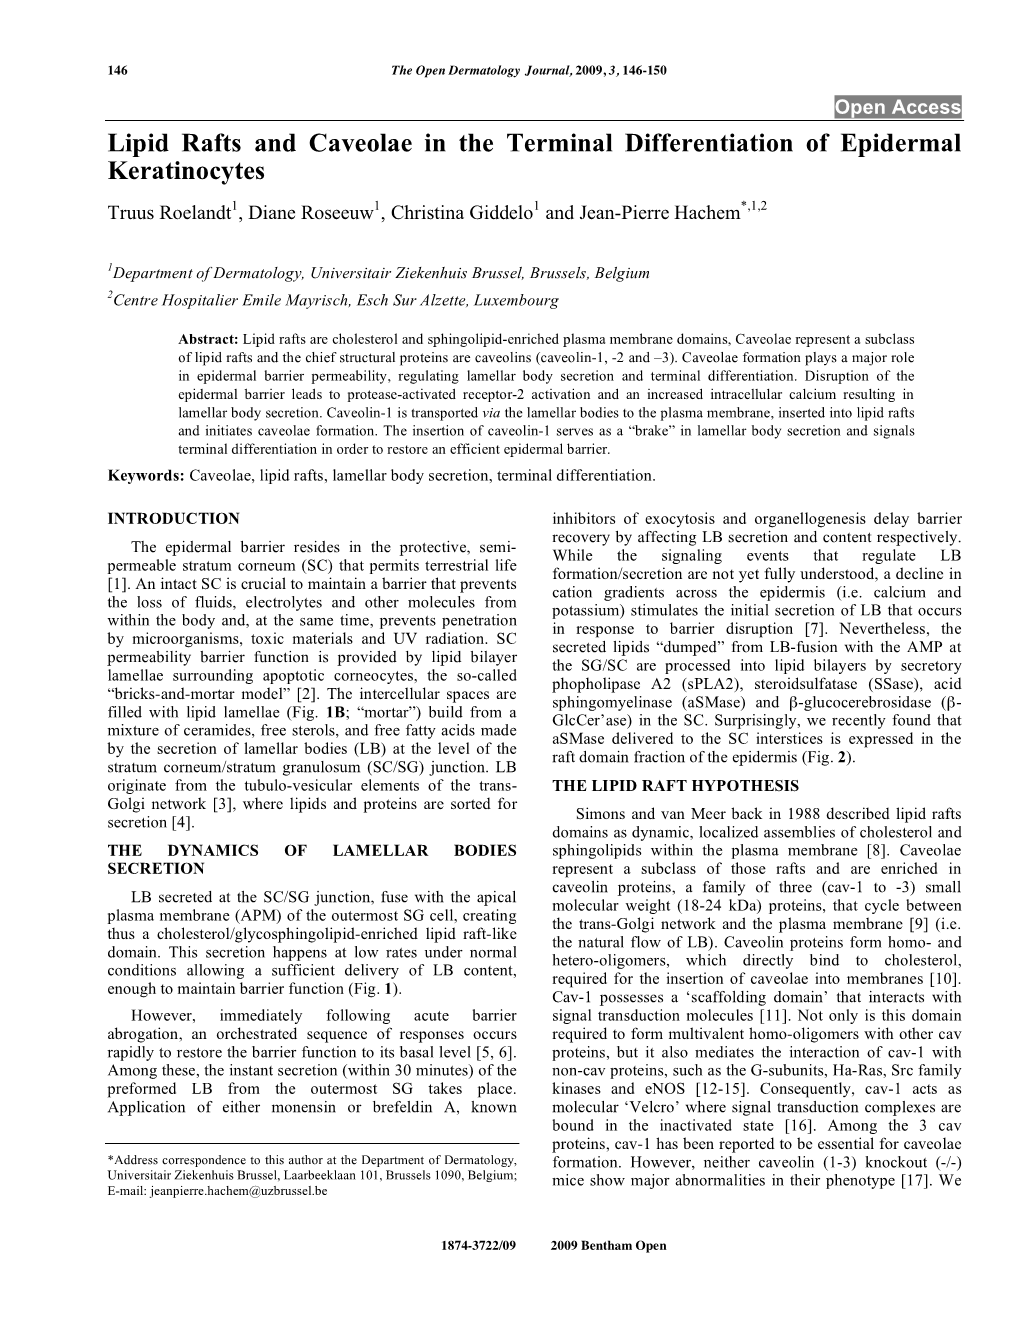 Lipid Rafts and Caveolae in the Terminal Differentiation of Epidermal Keratinocytes Truus Roelandt1, Diane Roseeuw1, Christina Giddelo1 and Jean-Pierre Hachem*,1,2